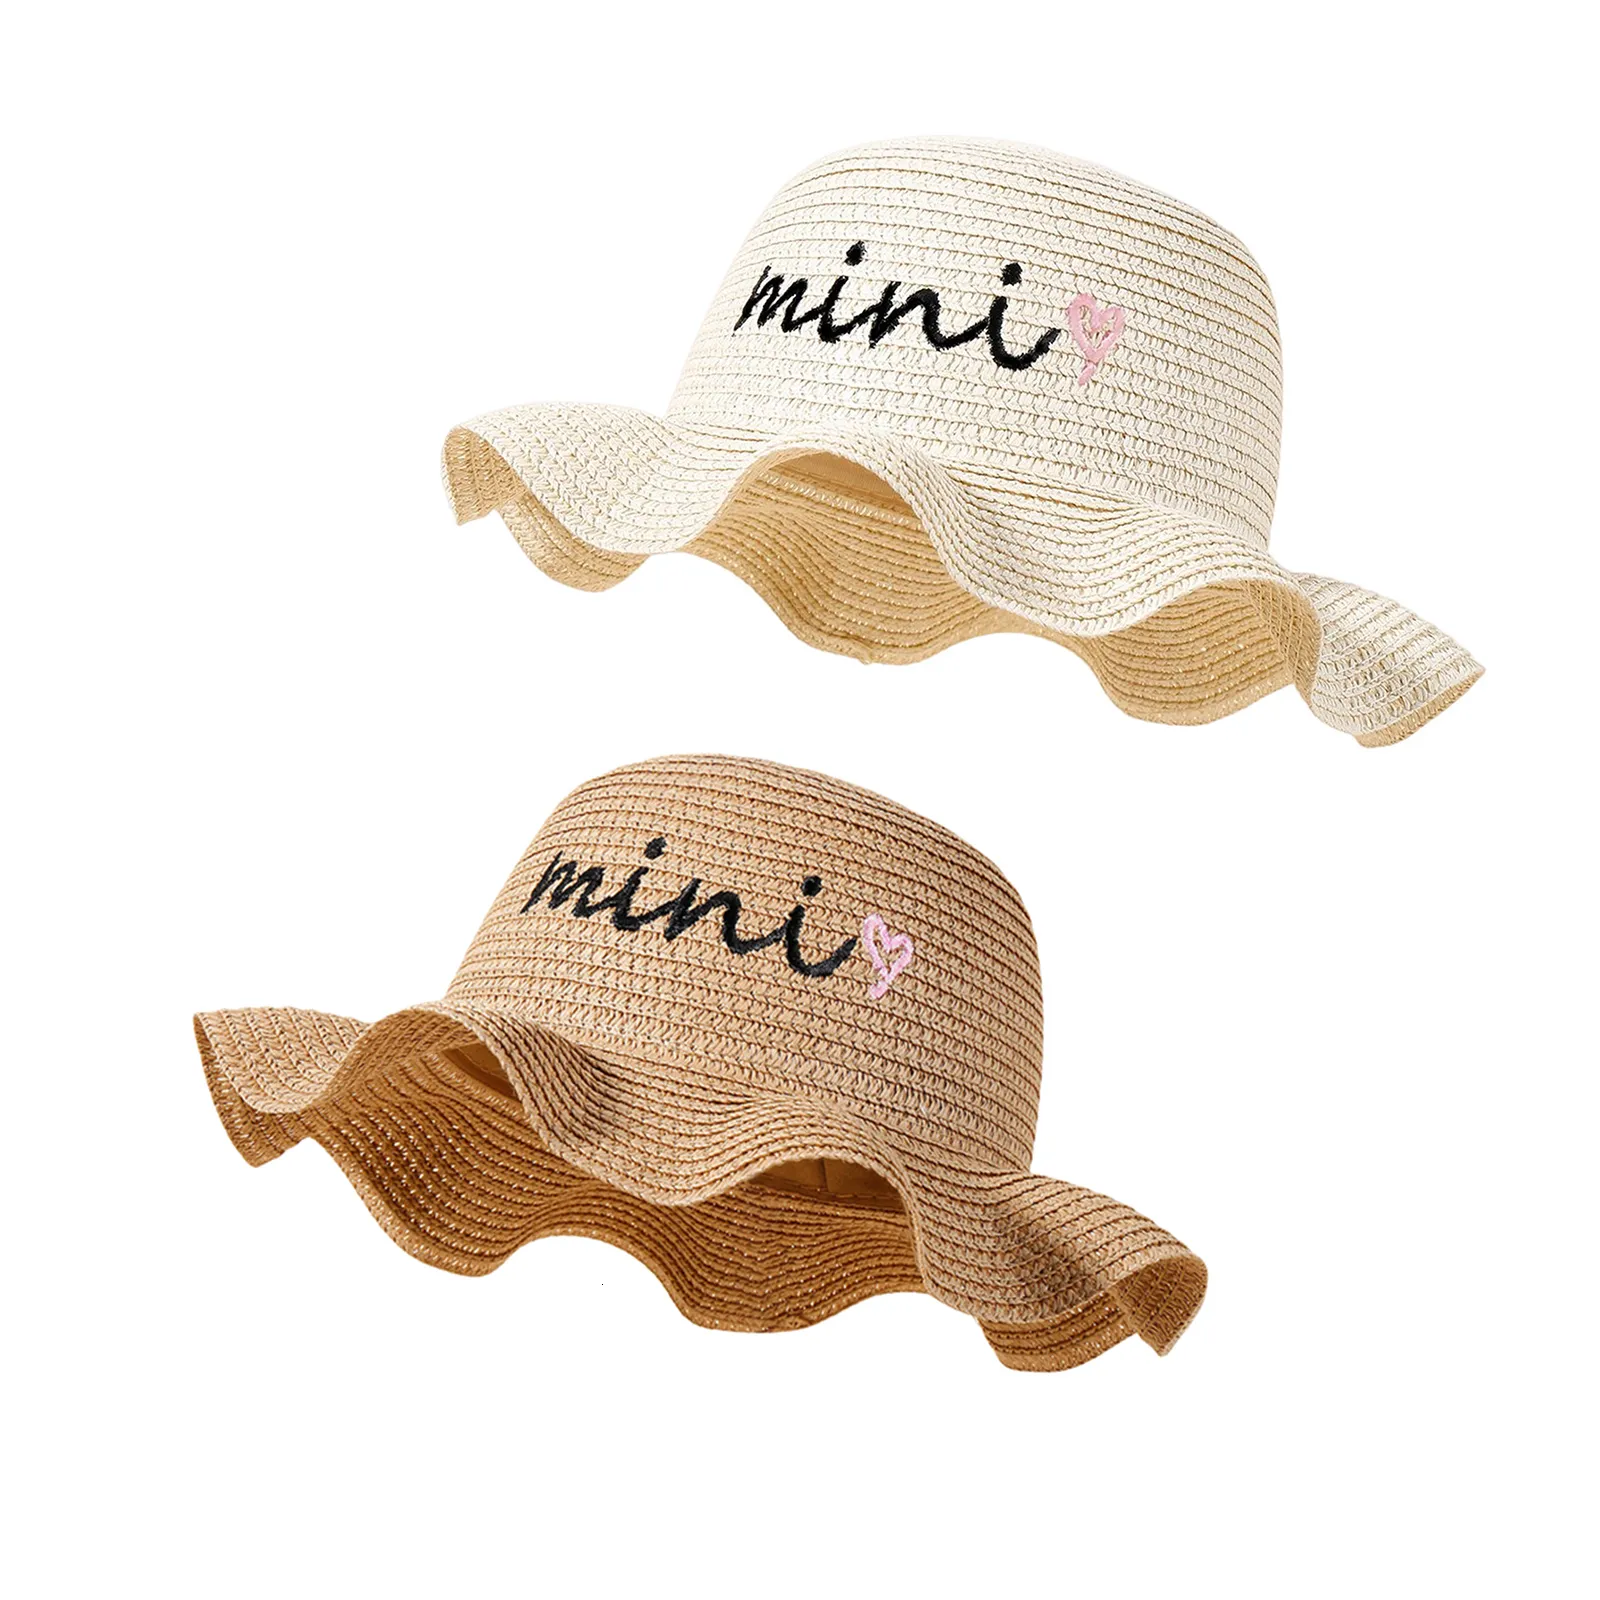 CAPS HATS -03-02 LIORITIIN 0-15 Years Kids Girl Bowler Straw Hat Wide Brim Beach Sun Caps Summer Seaside Travel Outdoor 230608